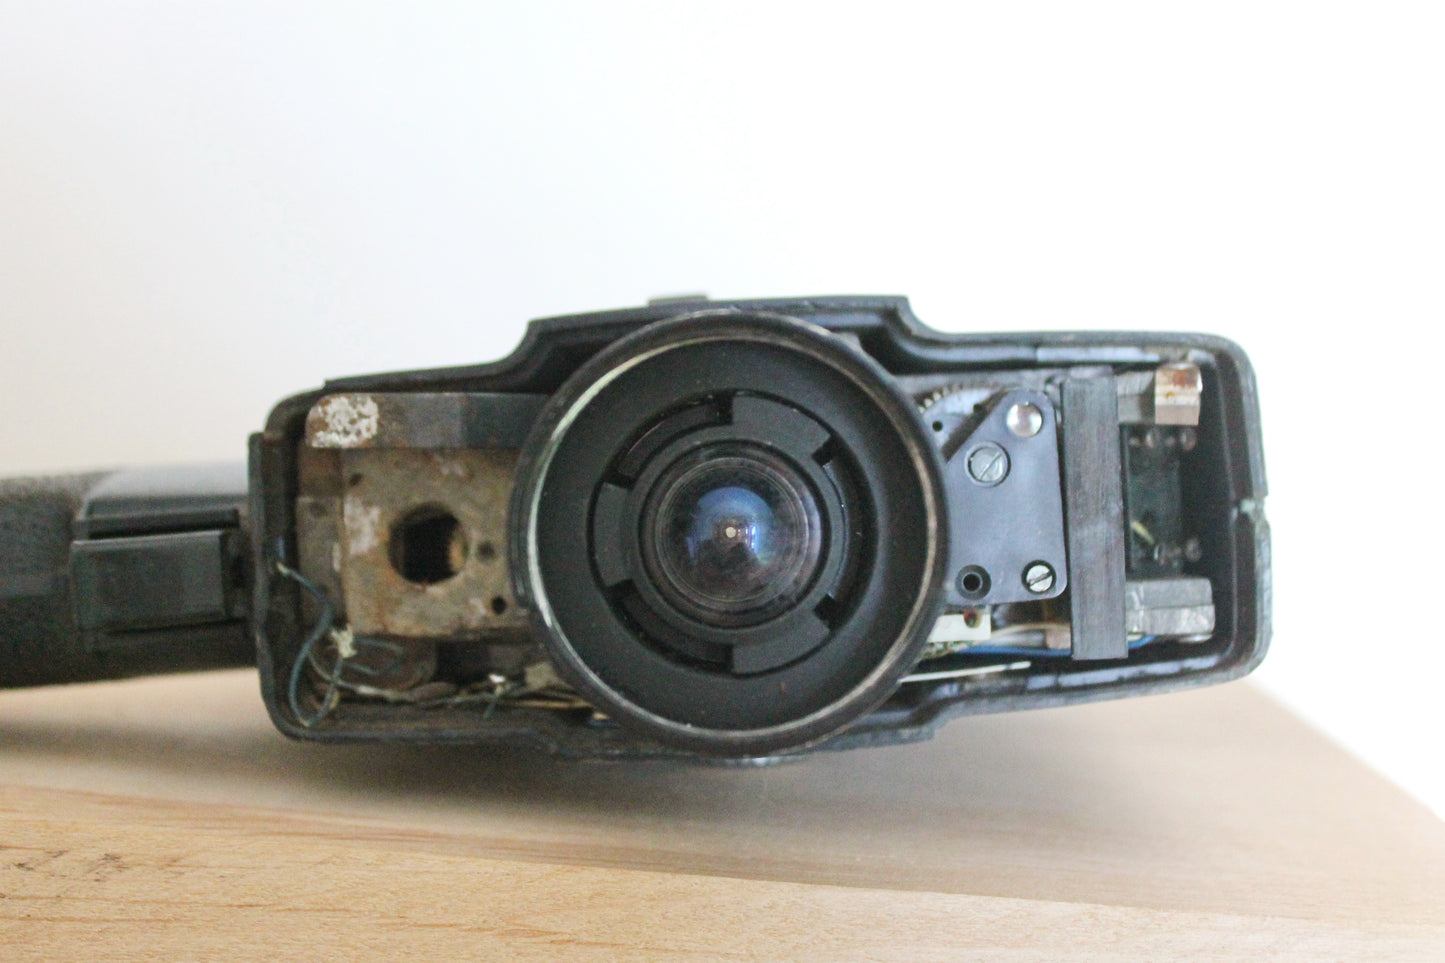 Old Vintage Soviet Movie Camera - LOMO Aurora 219 - 8mm film - Vintage Soviet Film Camera - Collectible Camera (no front panel)